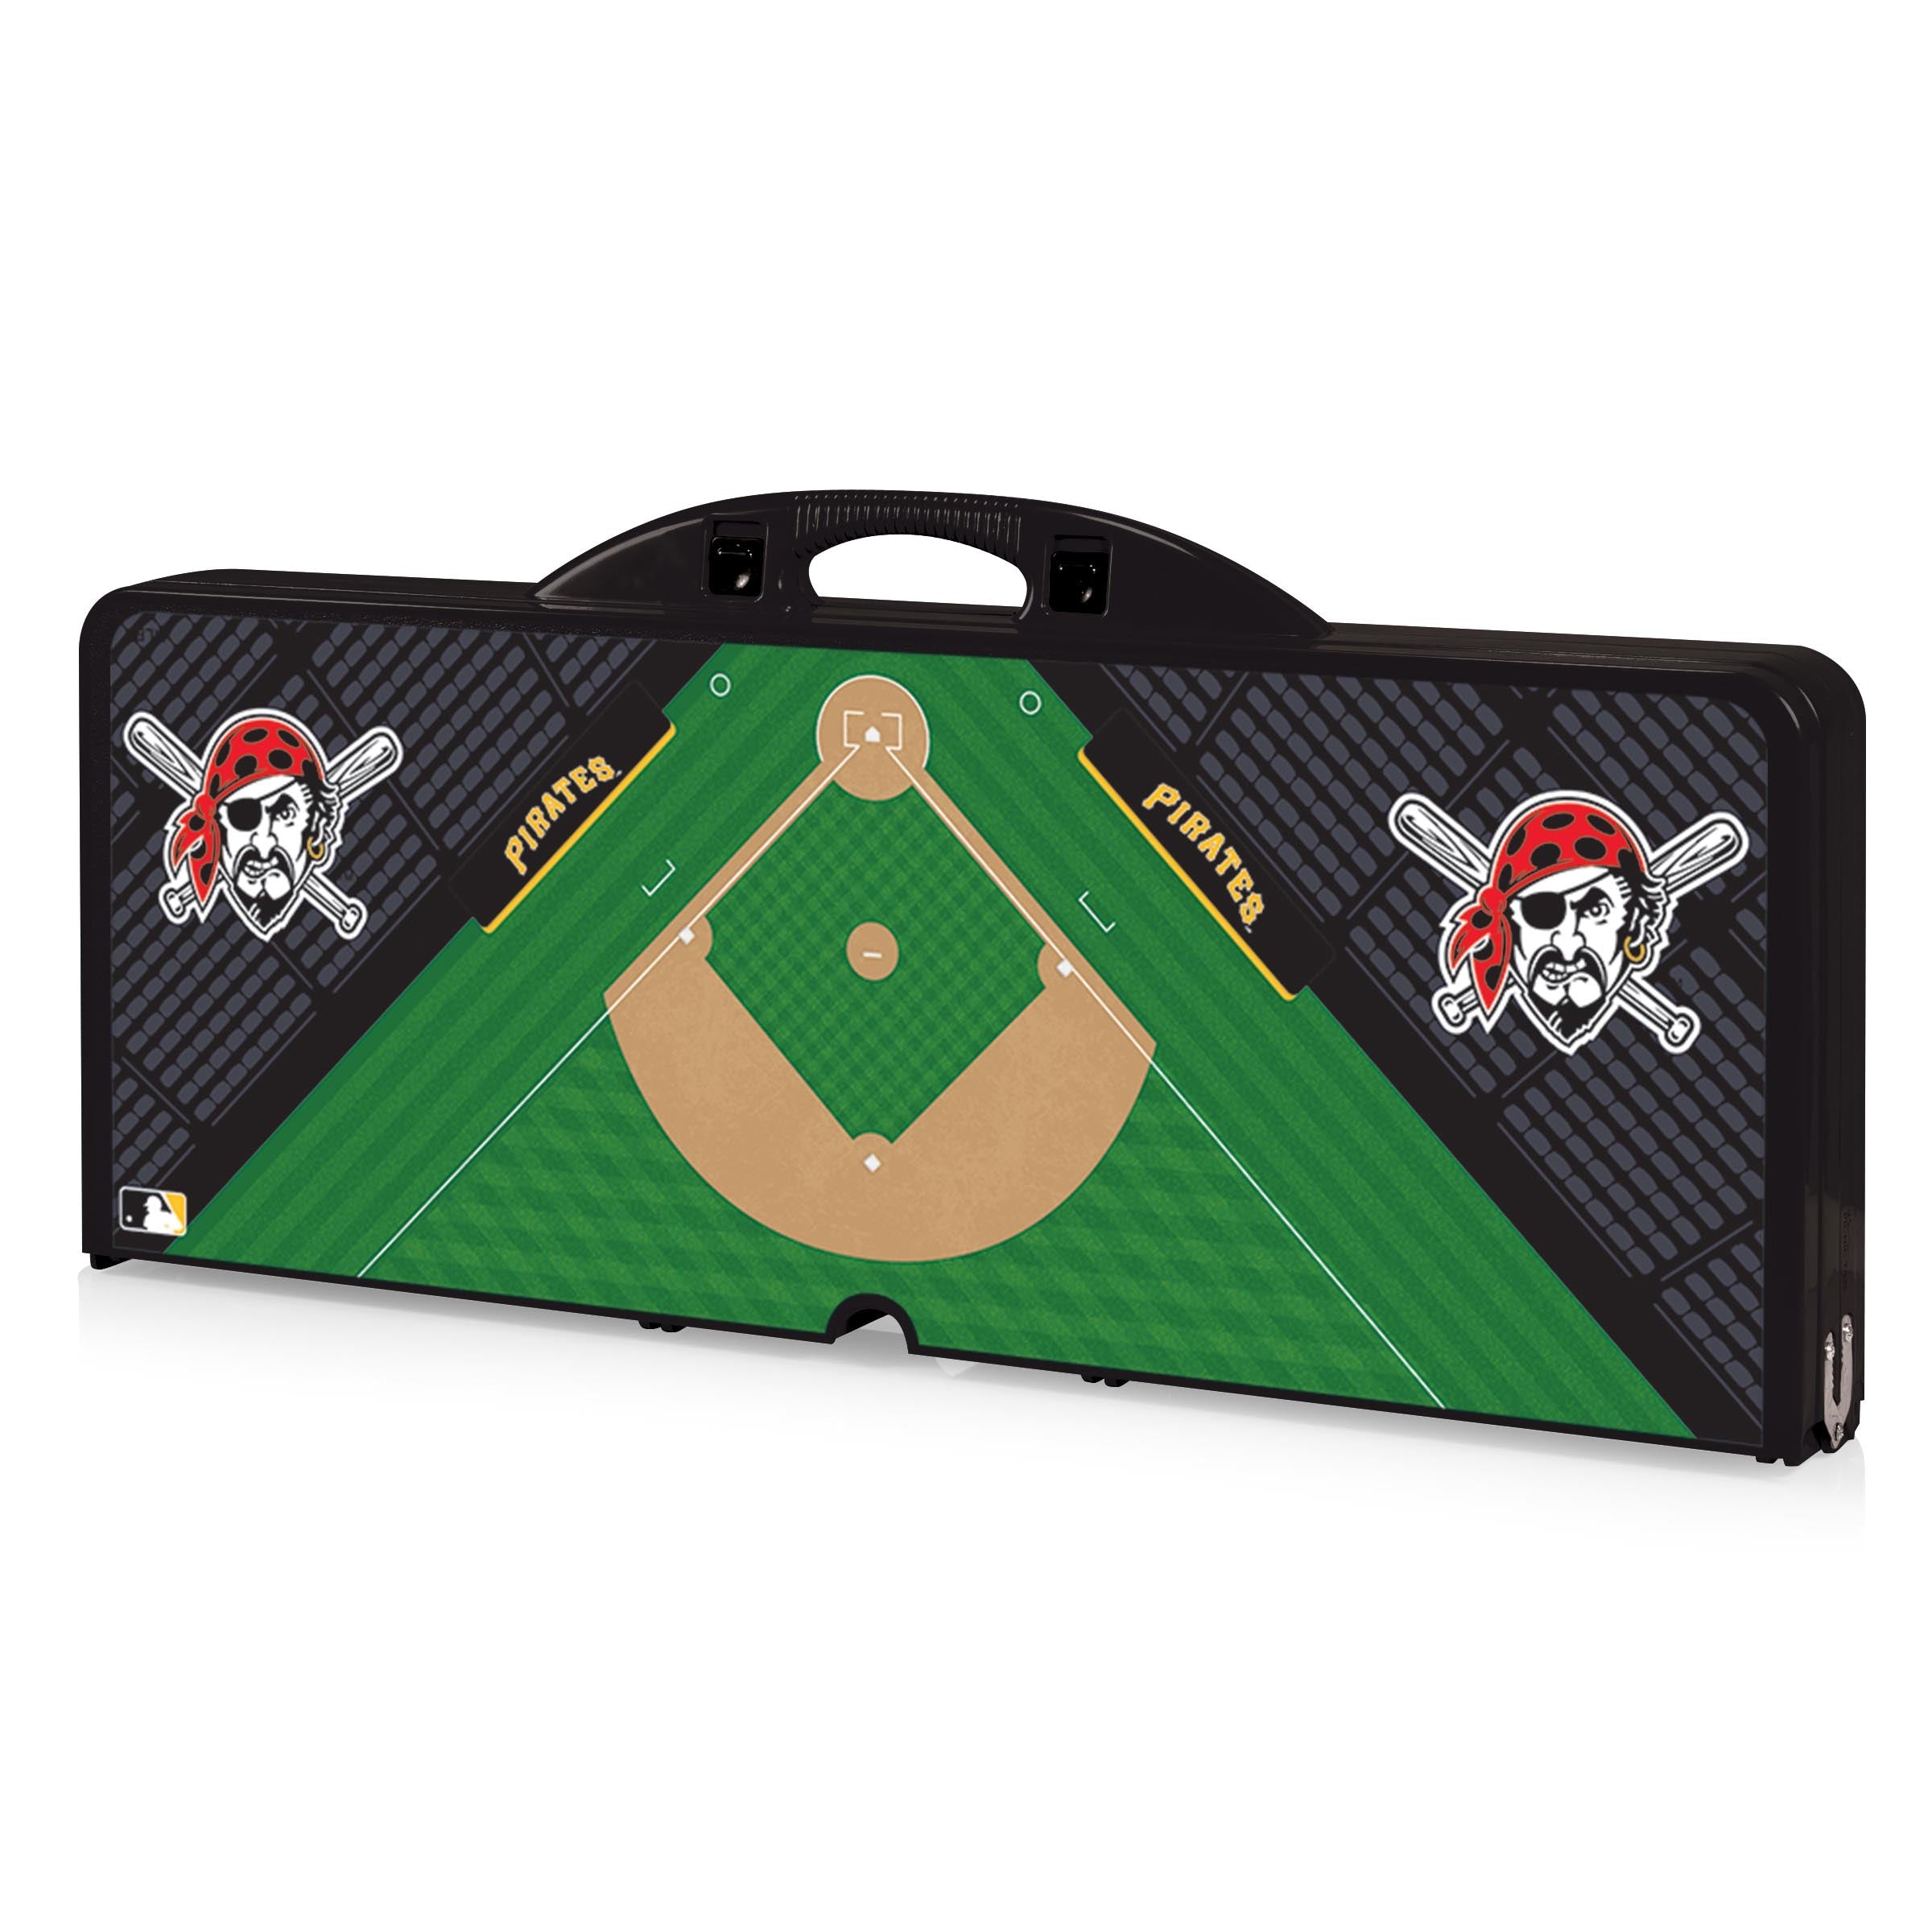 Baseball Diamond - Pittsburgh Pirates - Picnic Table Portable Folding Table with Seats